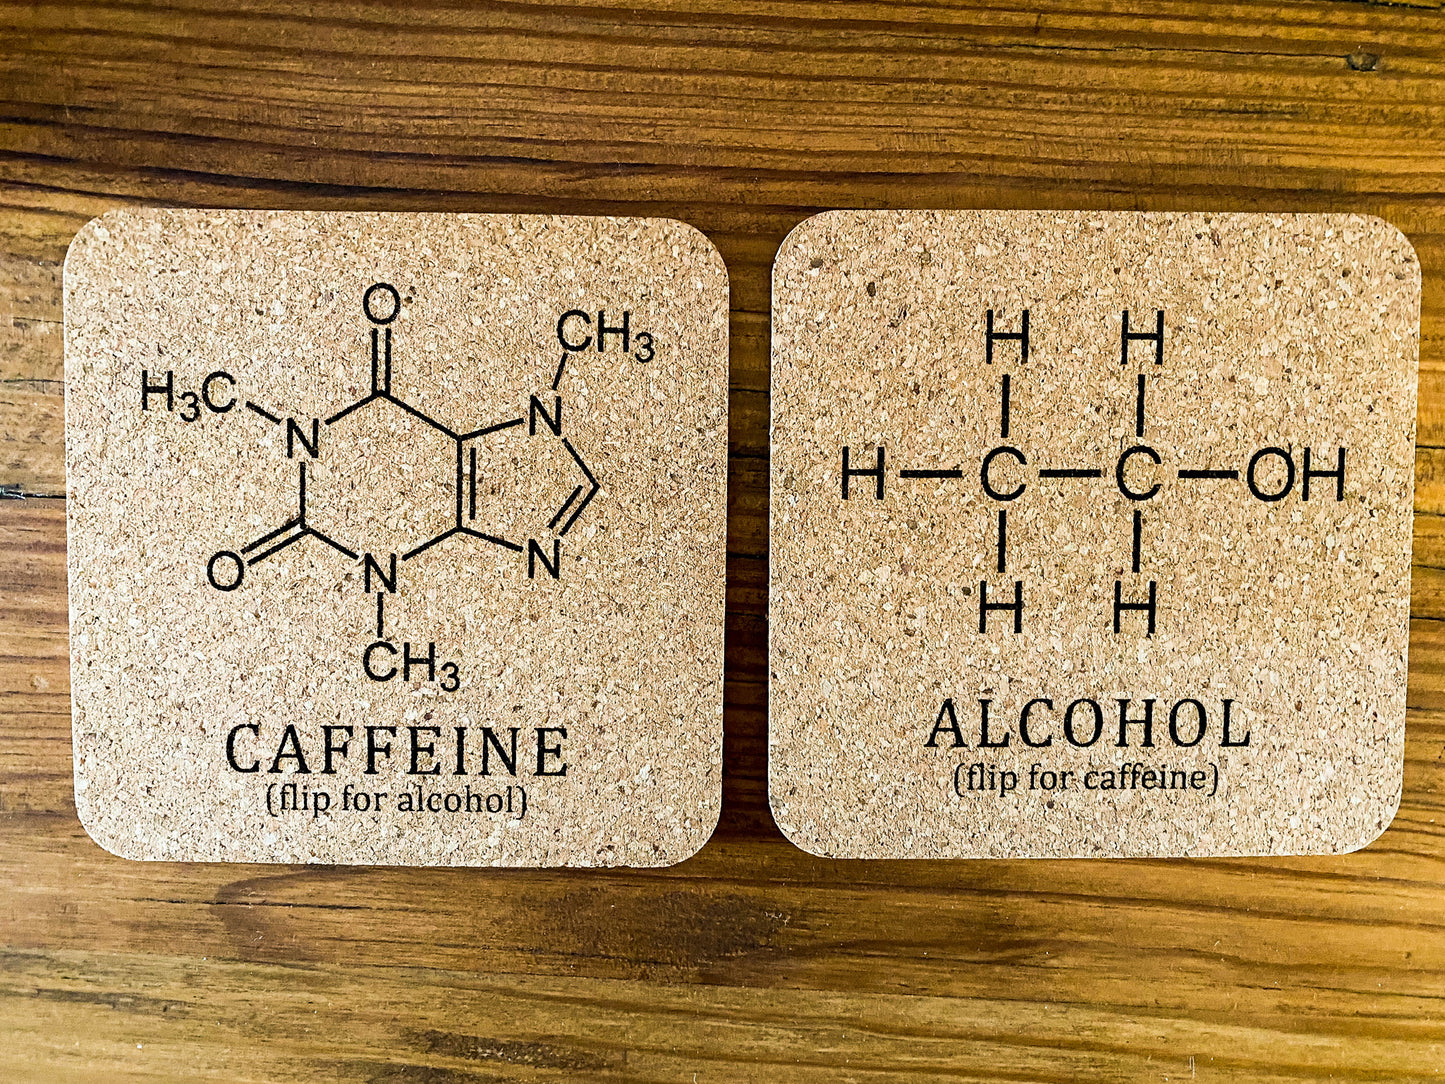 Caffeine/Alcohol Double-Sided Cork Coasters